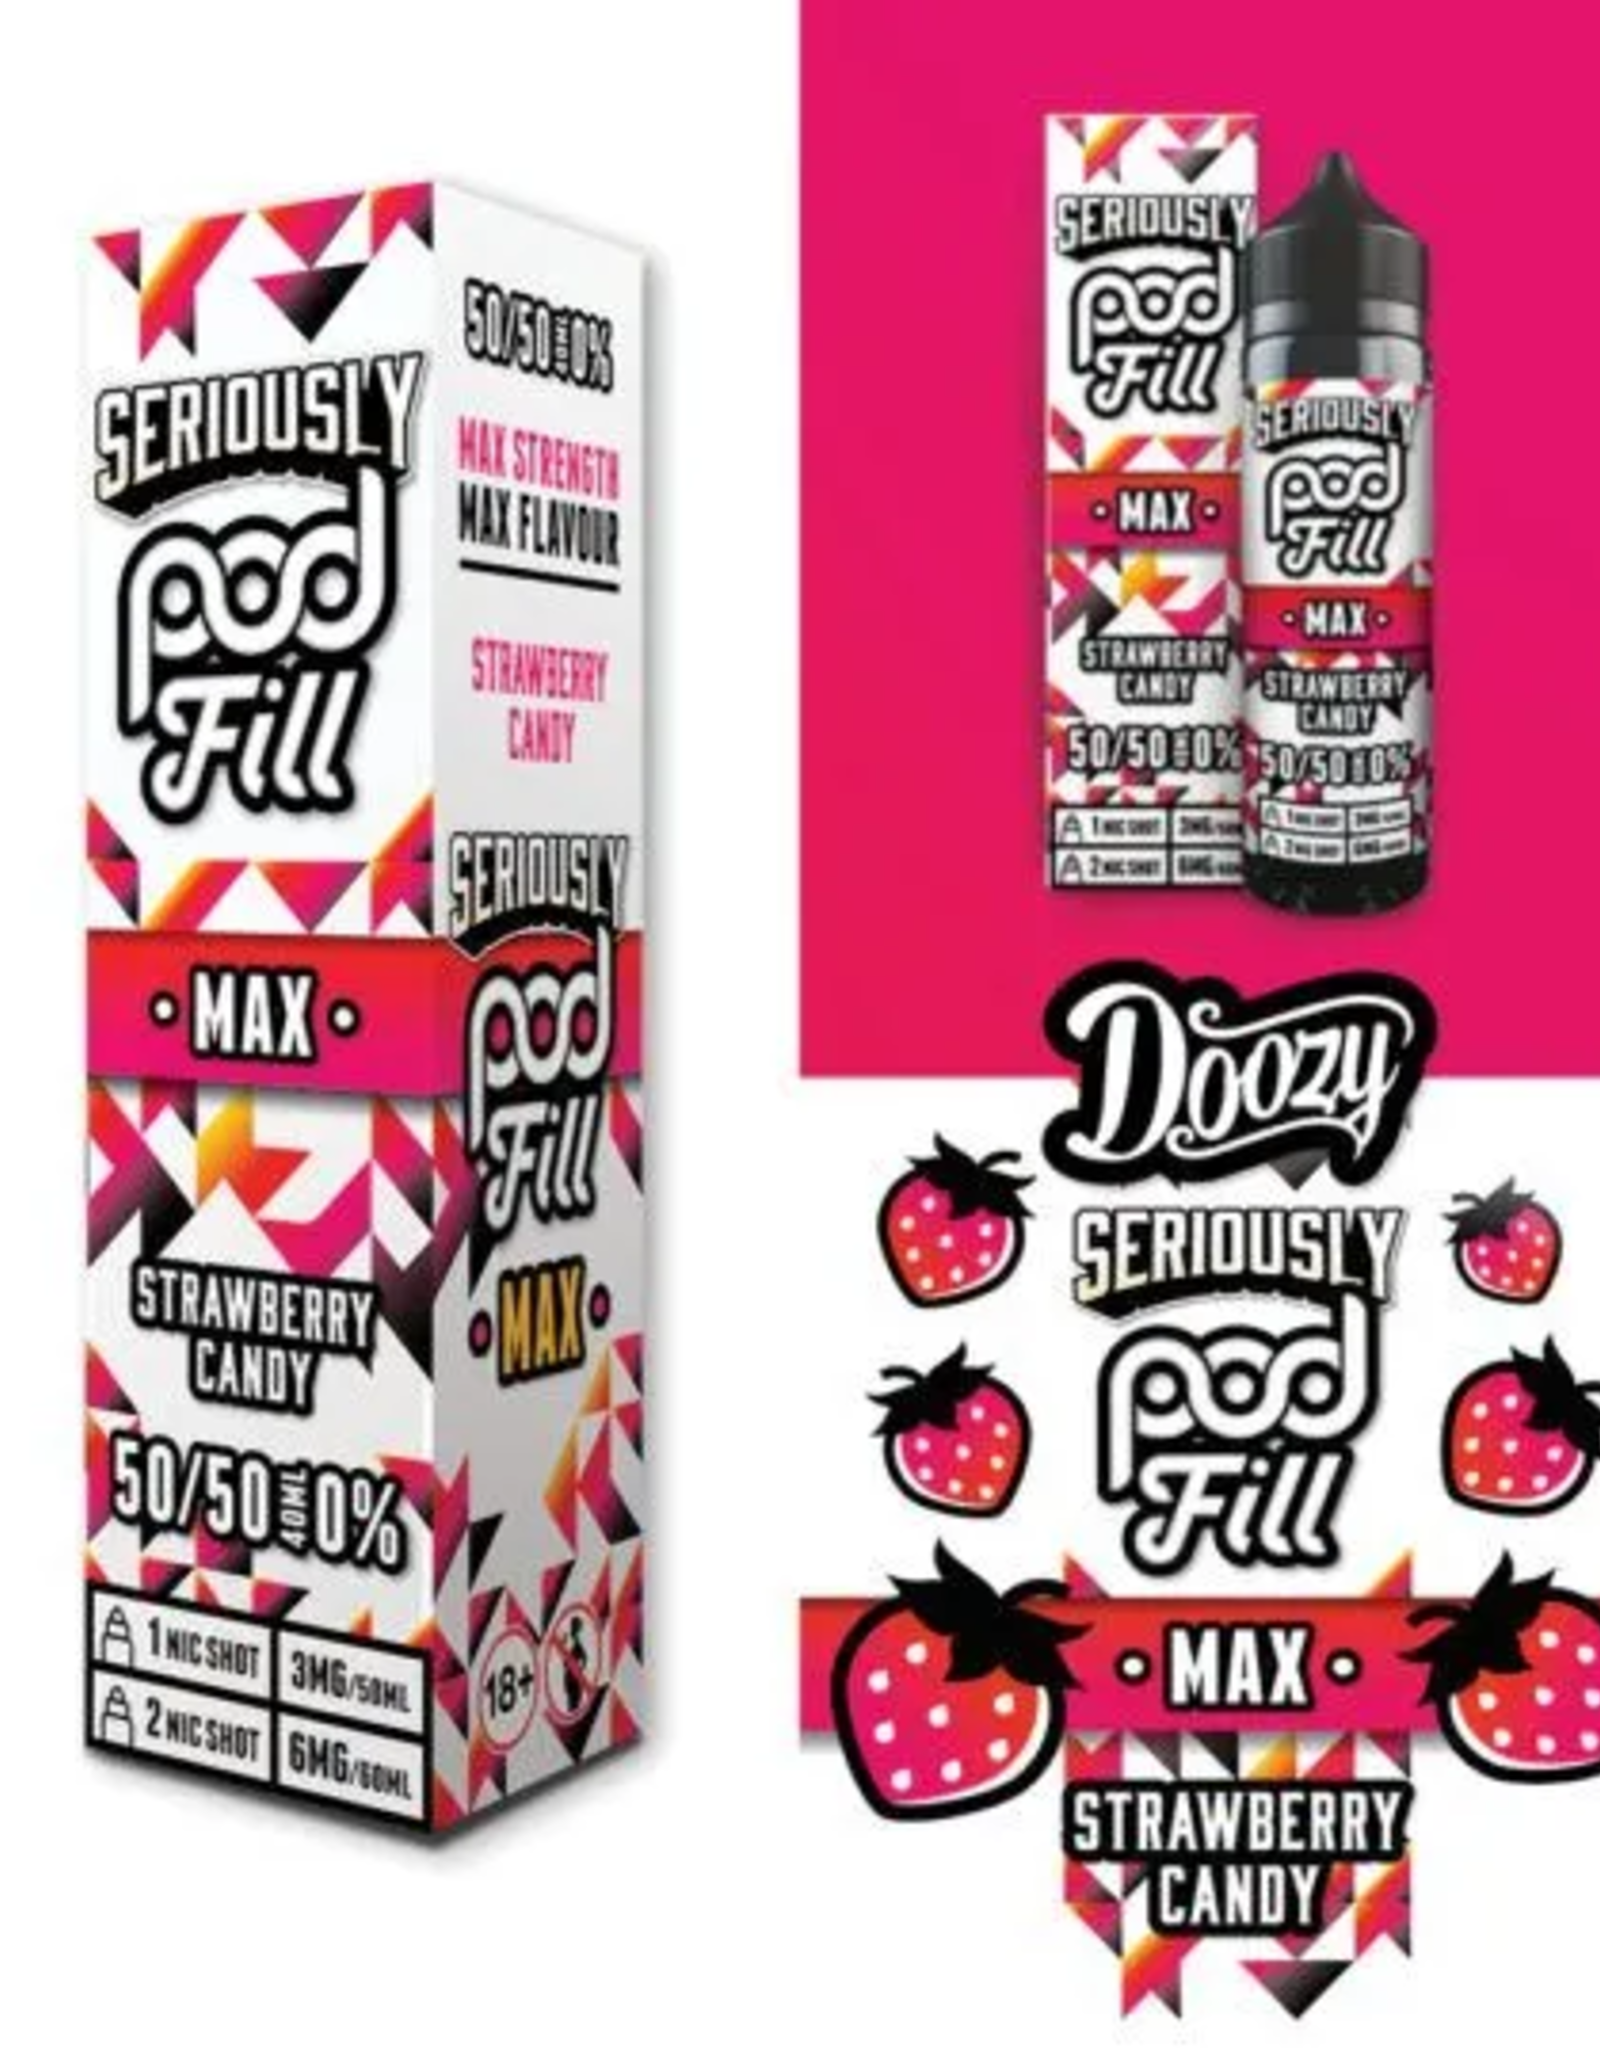 Doozy Vape Seriously pod fill MAX - Strawberry Candy 40/60ml